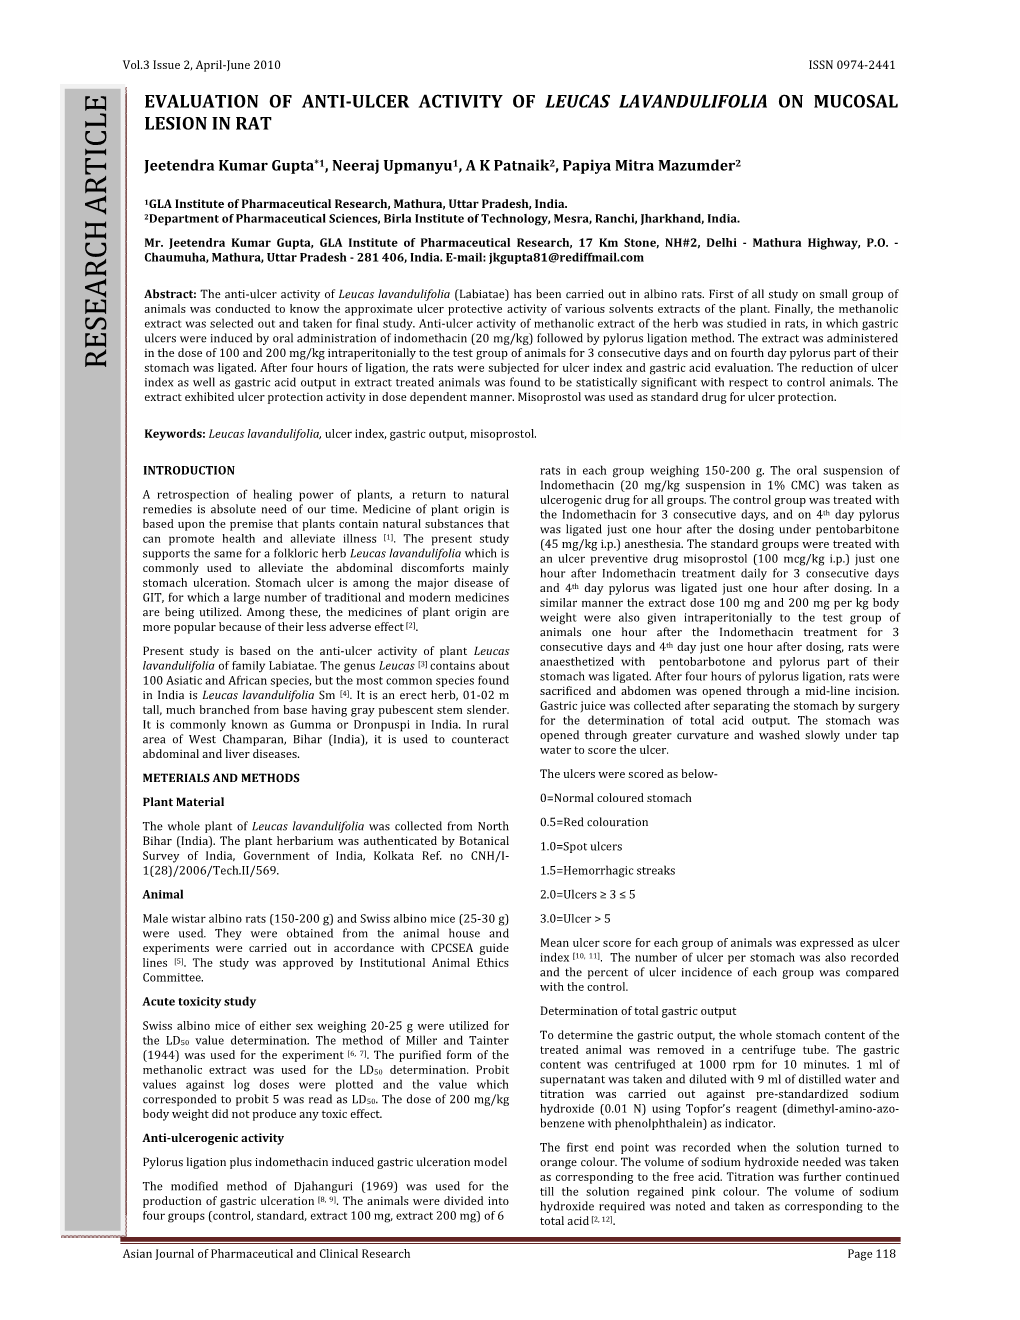 Evaluation of Anti-Ulcer Activity of Leucas Lavandulifolia on Mucosal Lesion In